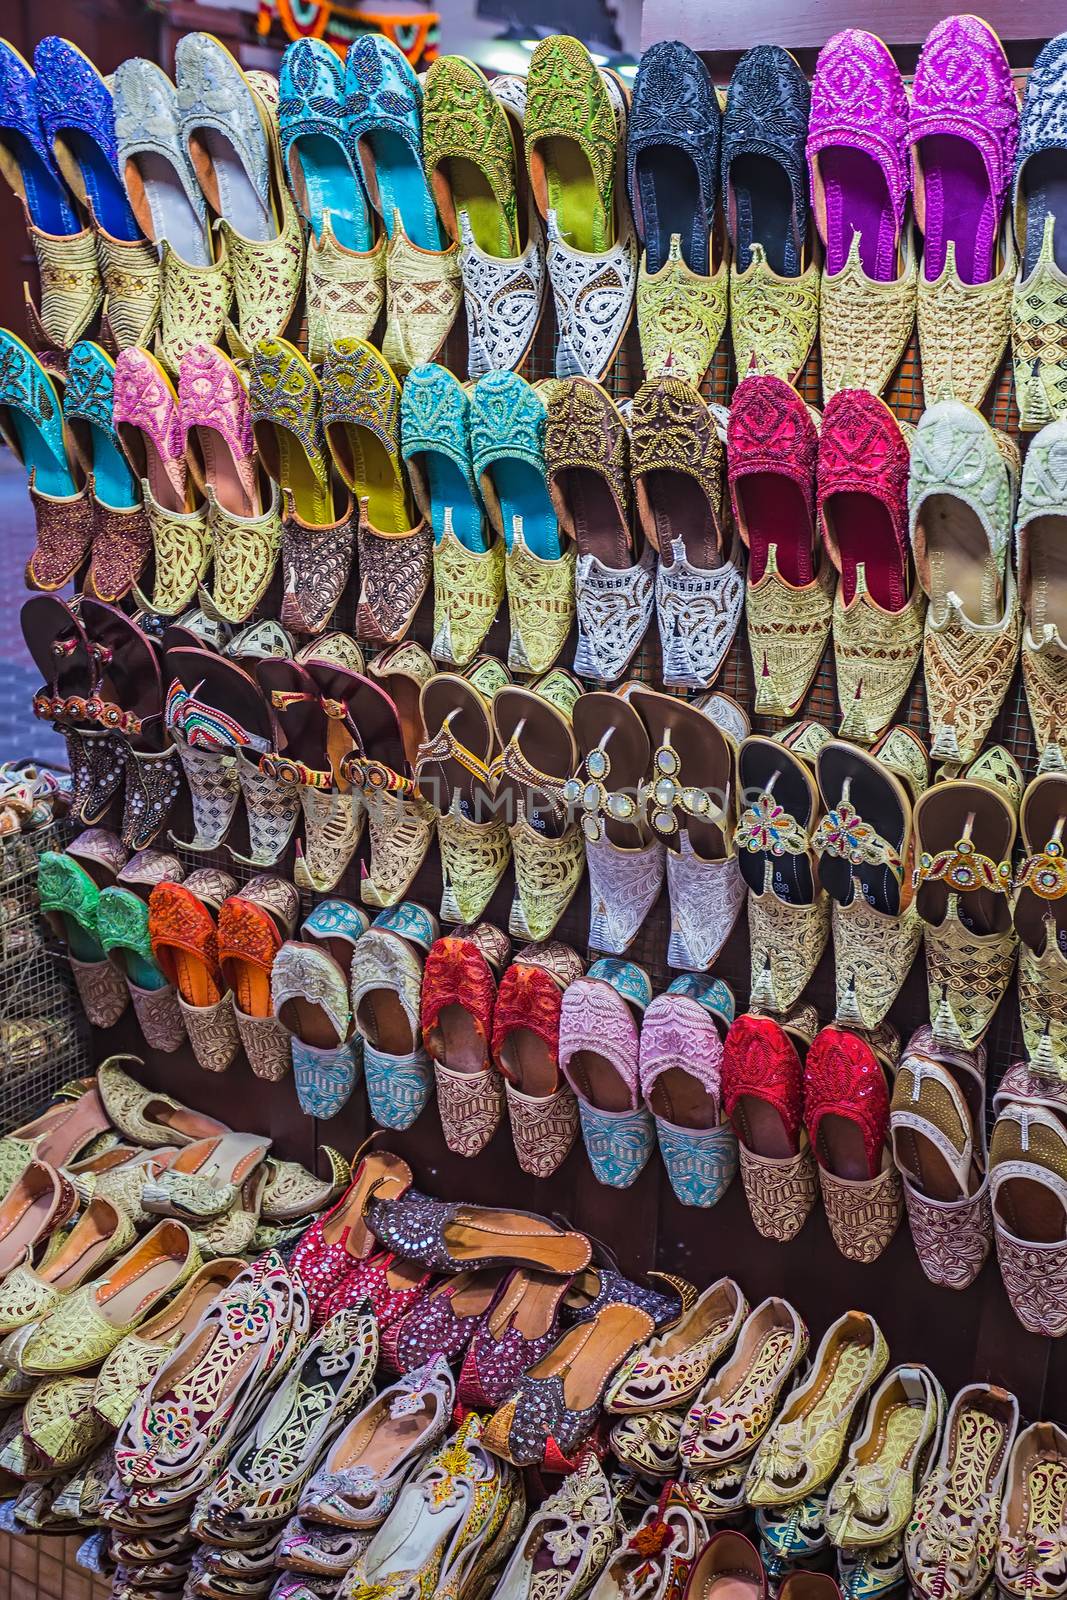 colorful shoes in souk Dubai,United Arab Emirates